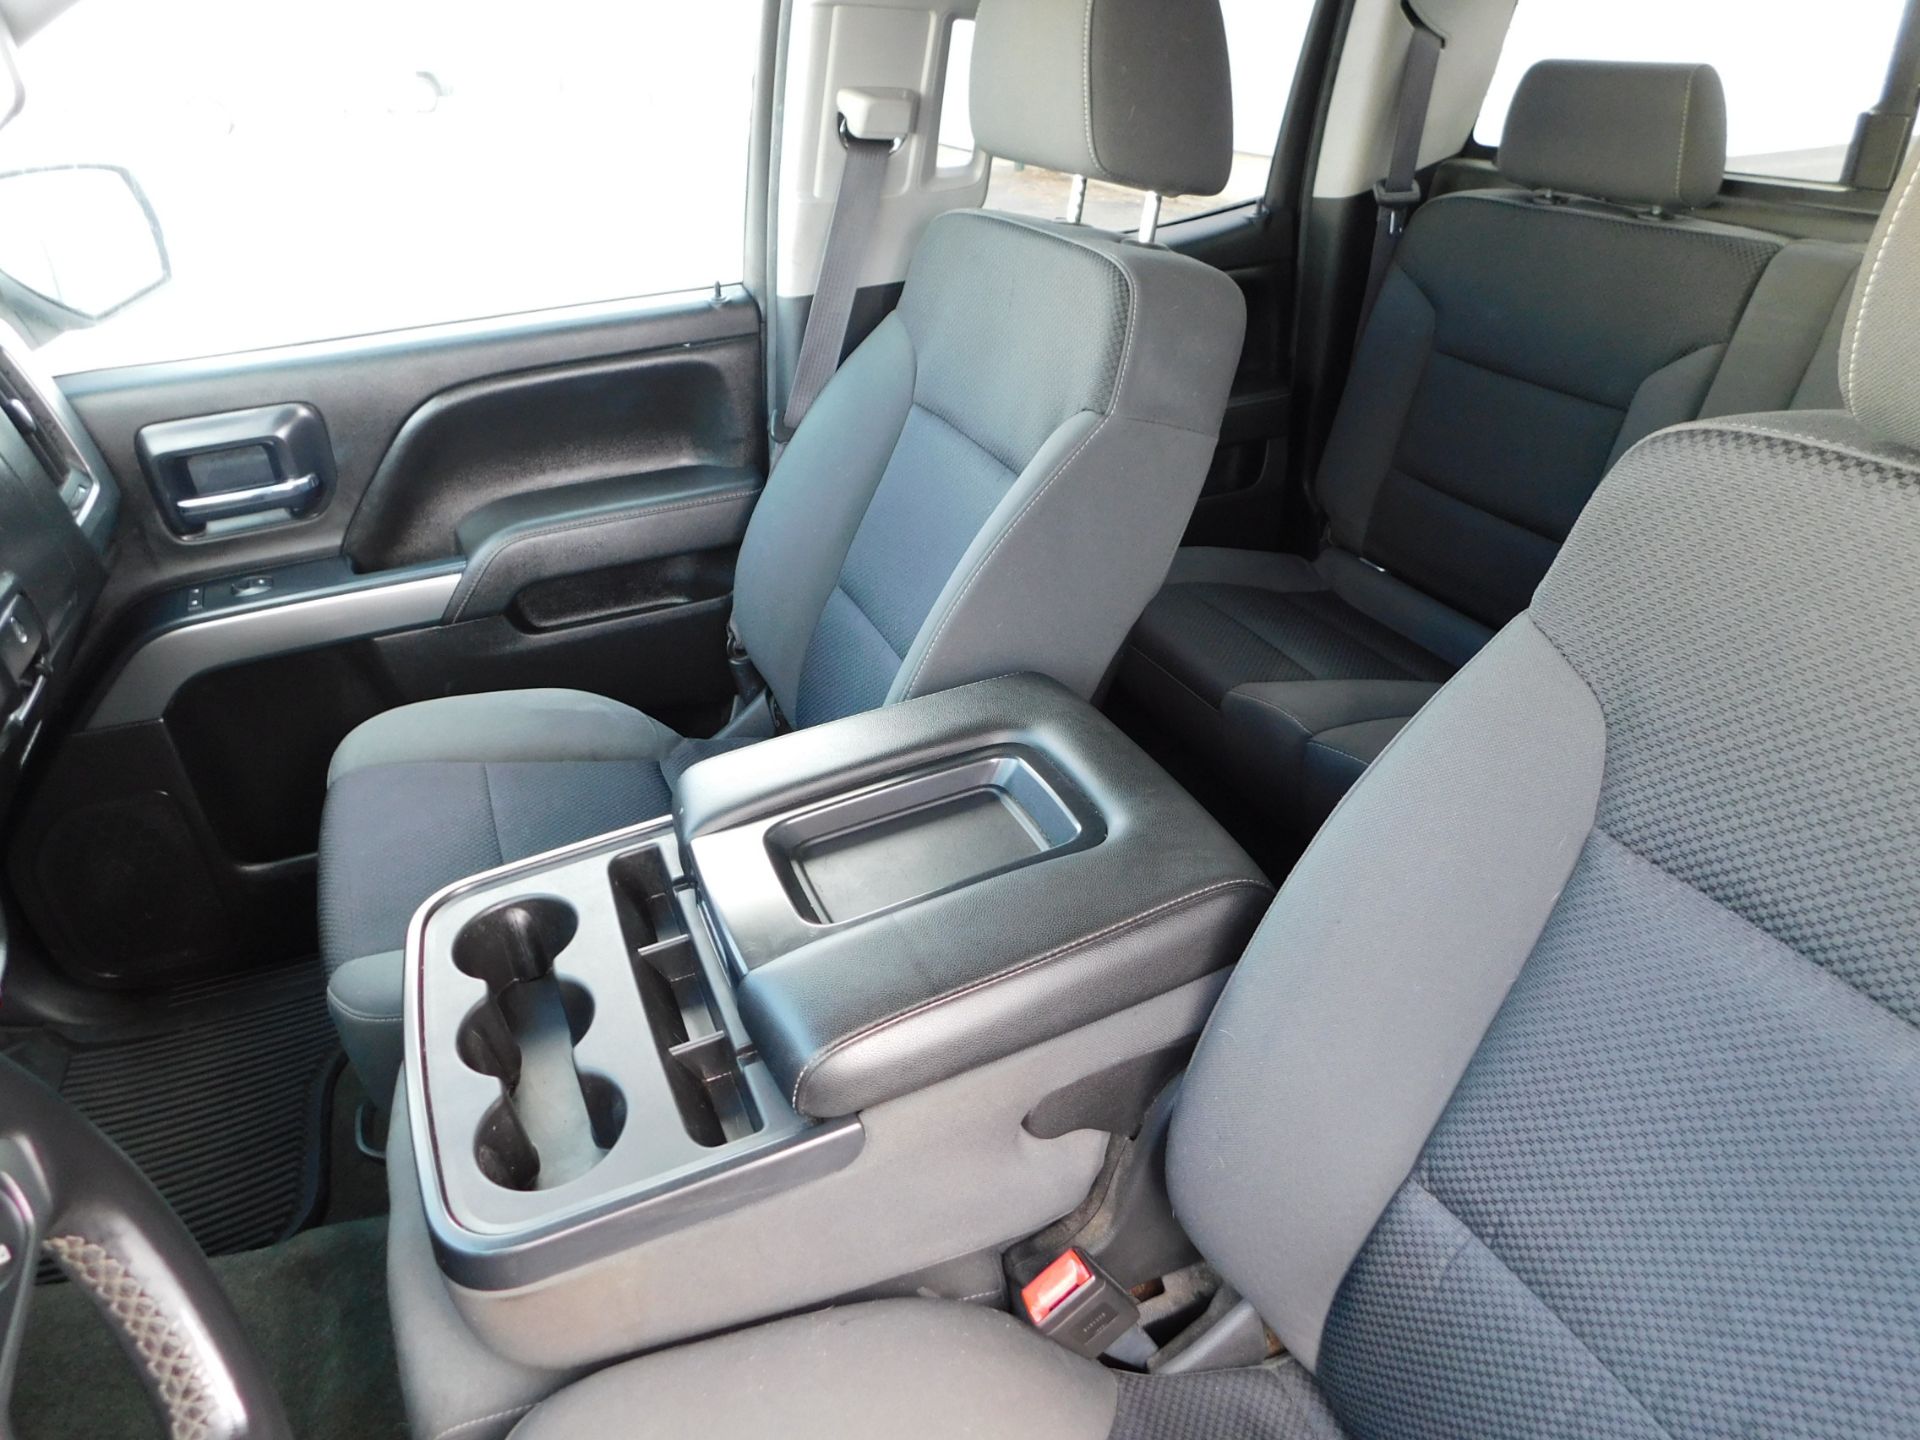 2014 Chevrolet Silverado LT Pickup, VIN 1GCVKREC3EZ139405, 4-Door 4 WD, Automatic, AM/FM, AC, Cruise - Image 30 of 51